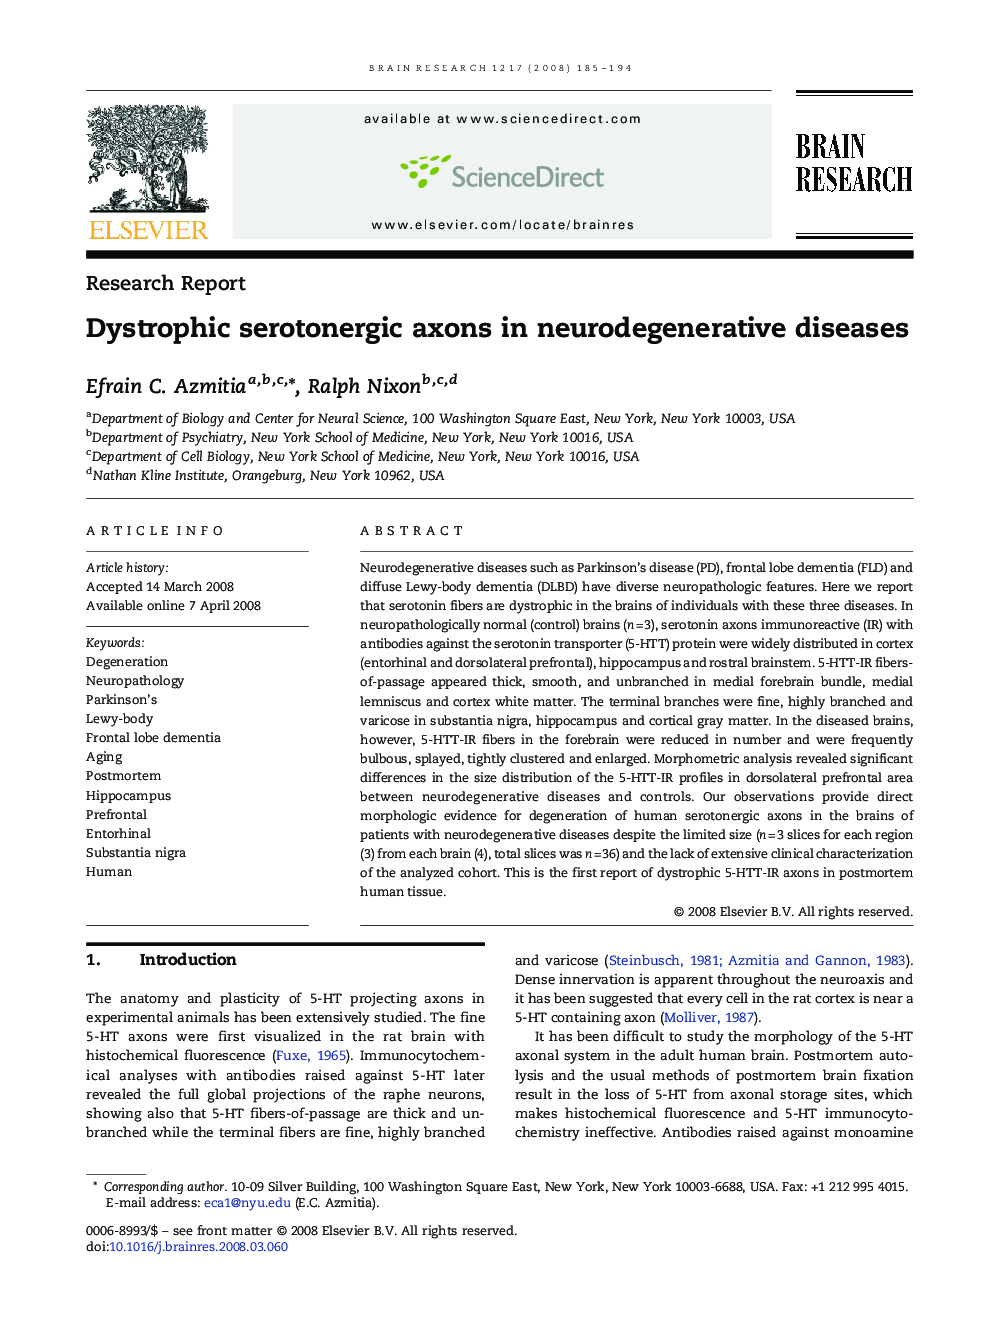 Dystrophic serotonergic axons in neurodegenerative diseases